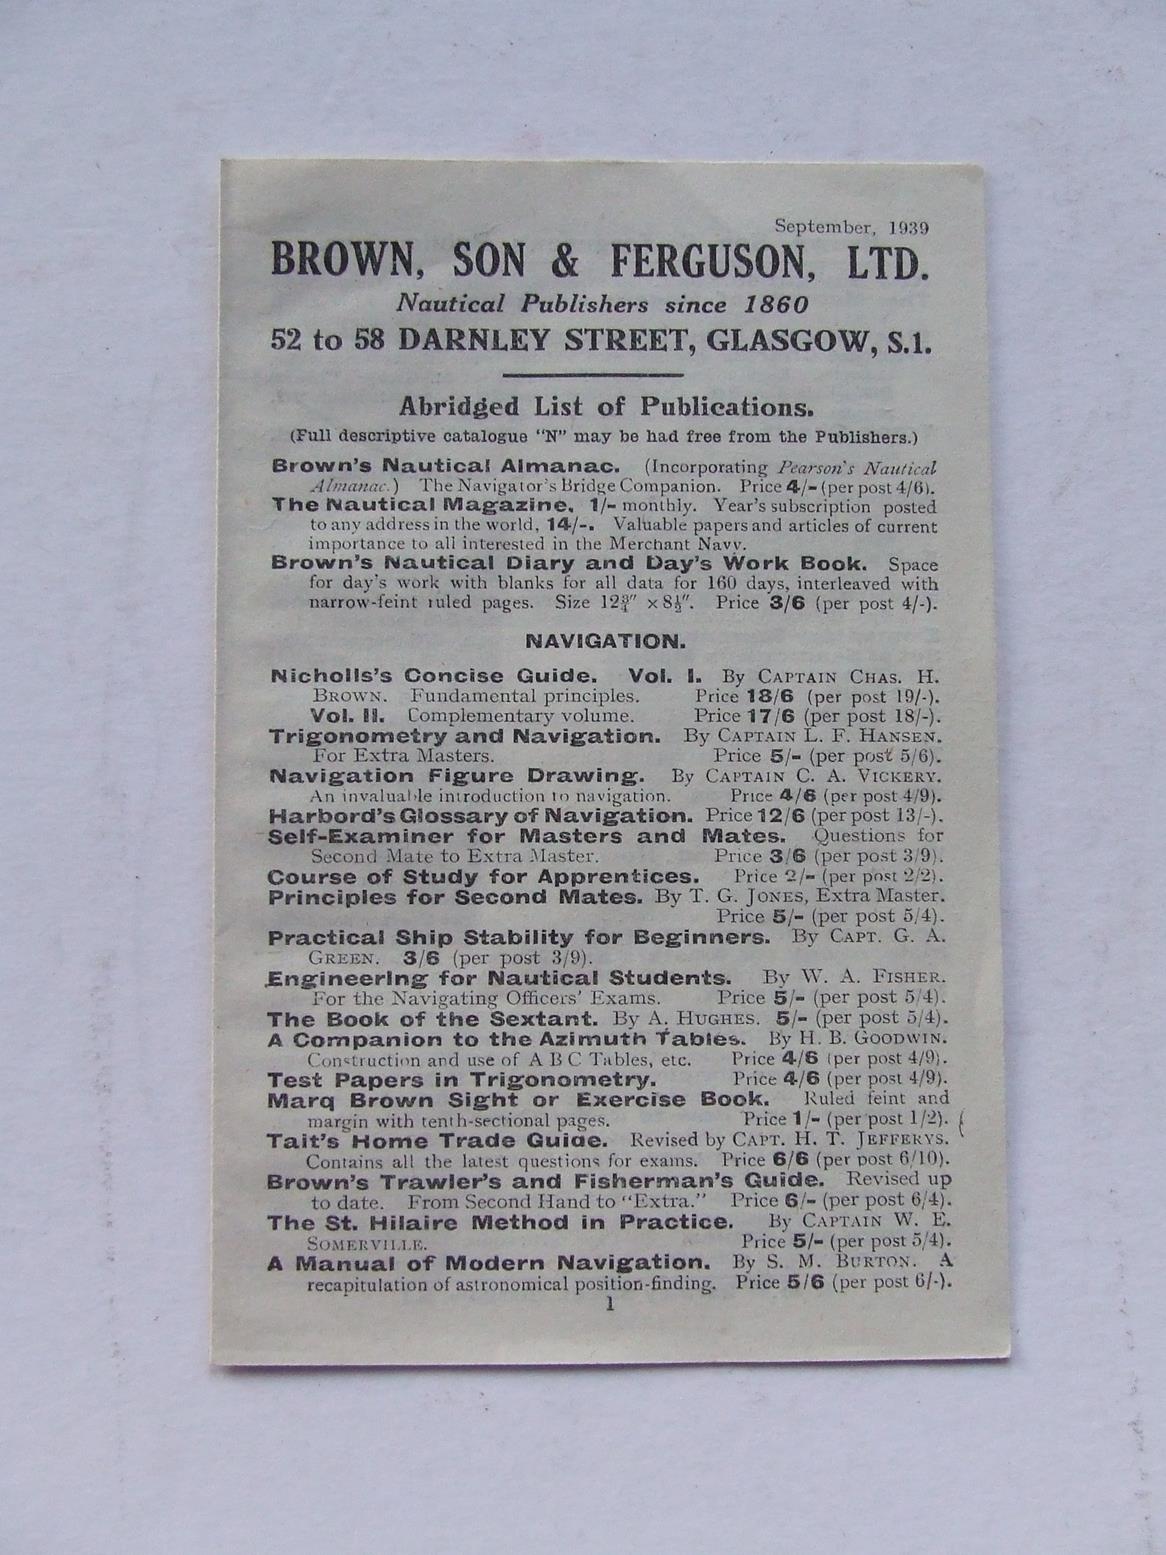 Brown, Son & Ferguson  -  abridged list of publications. September, 1939